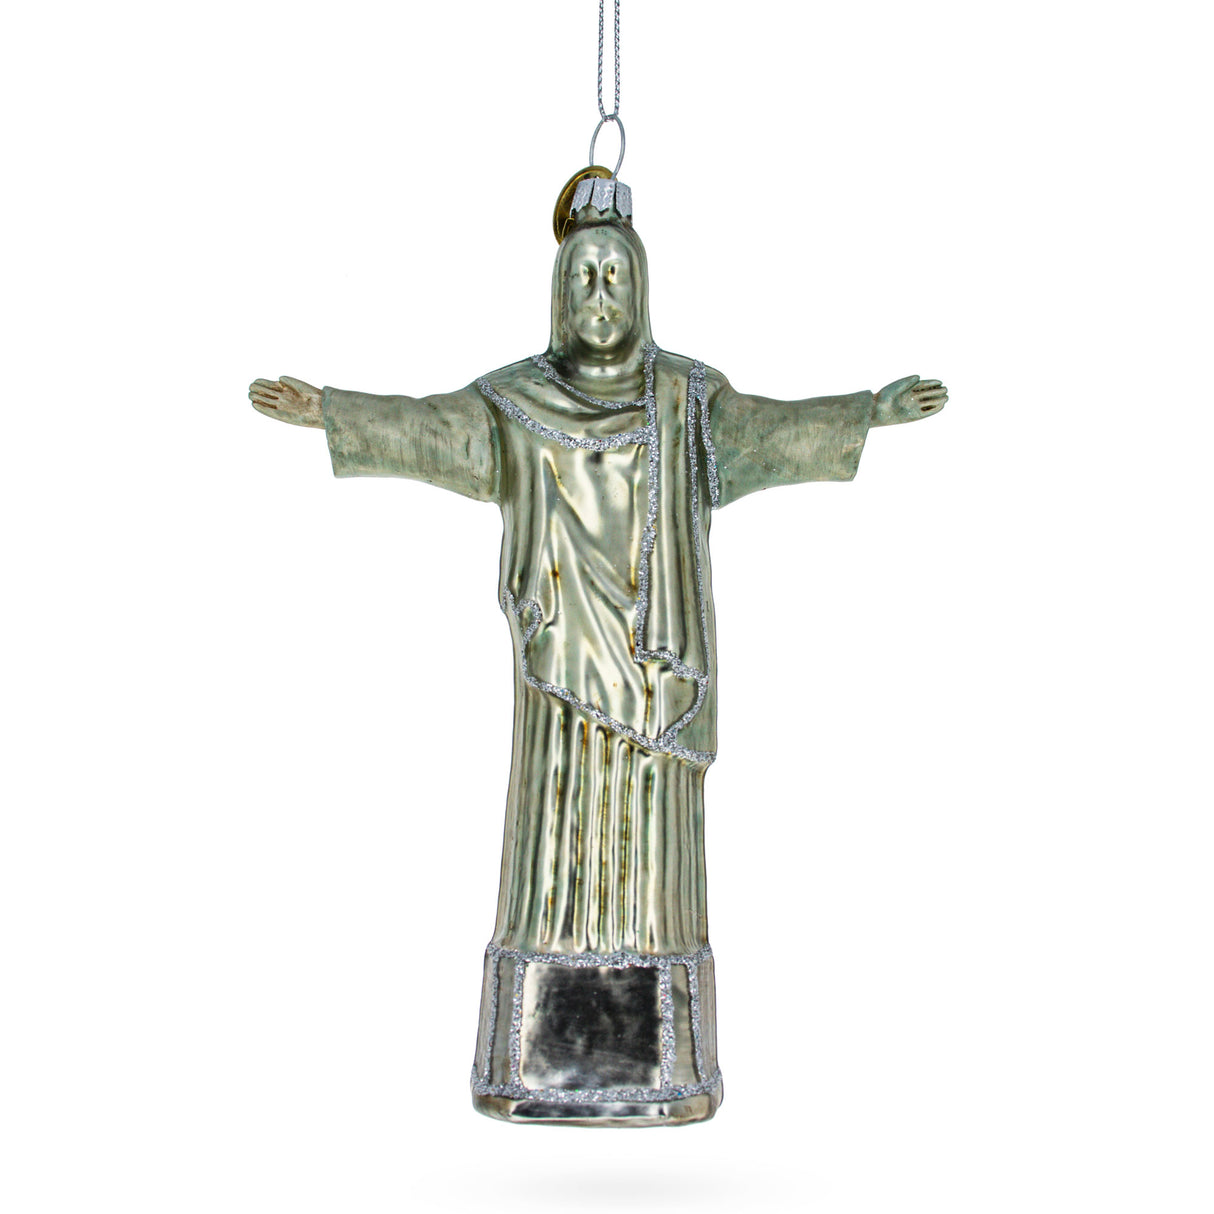 Glass Regenerate Legendary Christ the Redeemer, Rio De Janeiro, Brazil - Blown Glass Christmas Ornament in Silver color